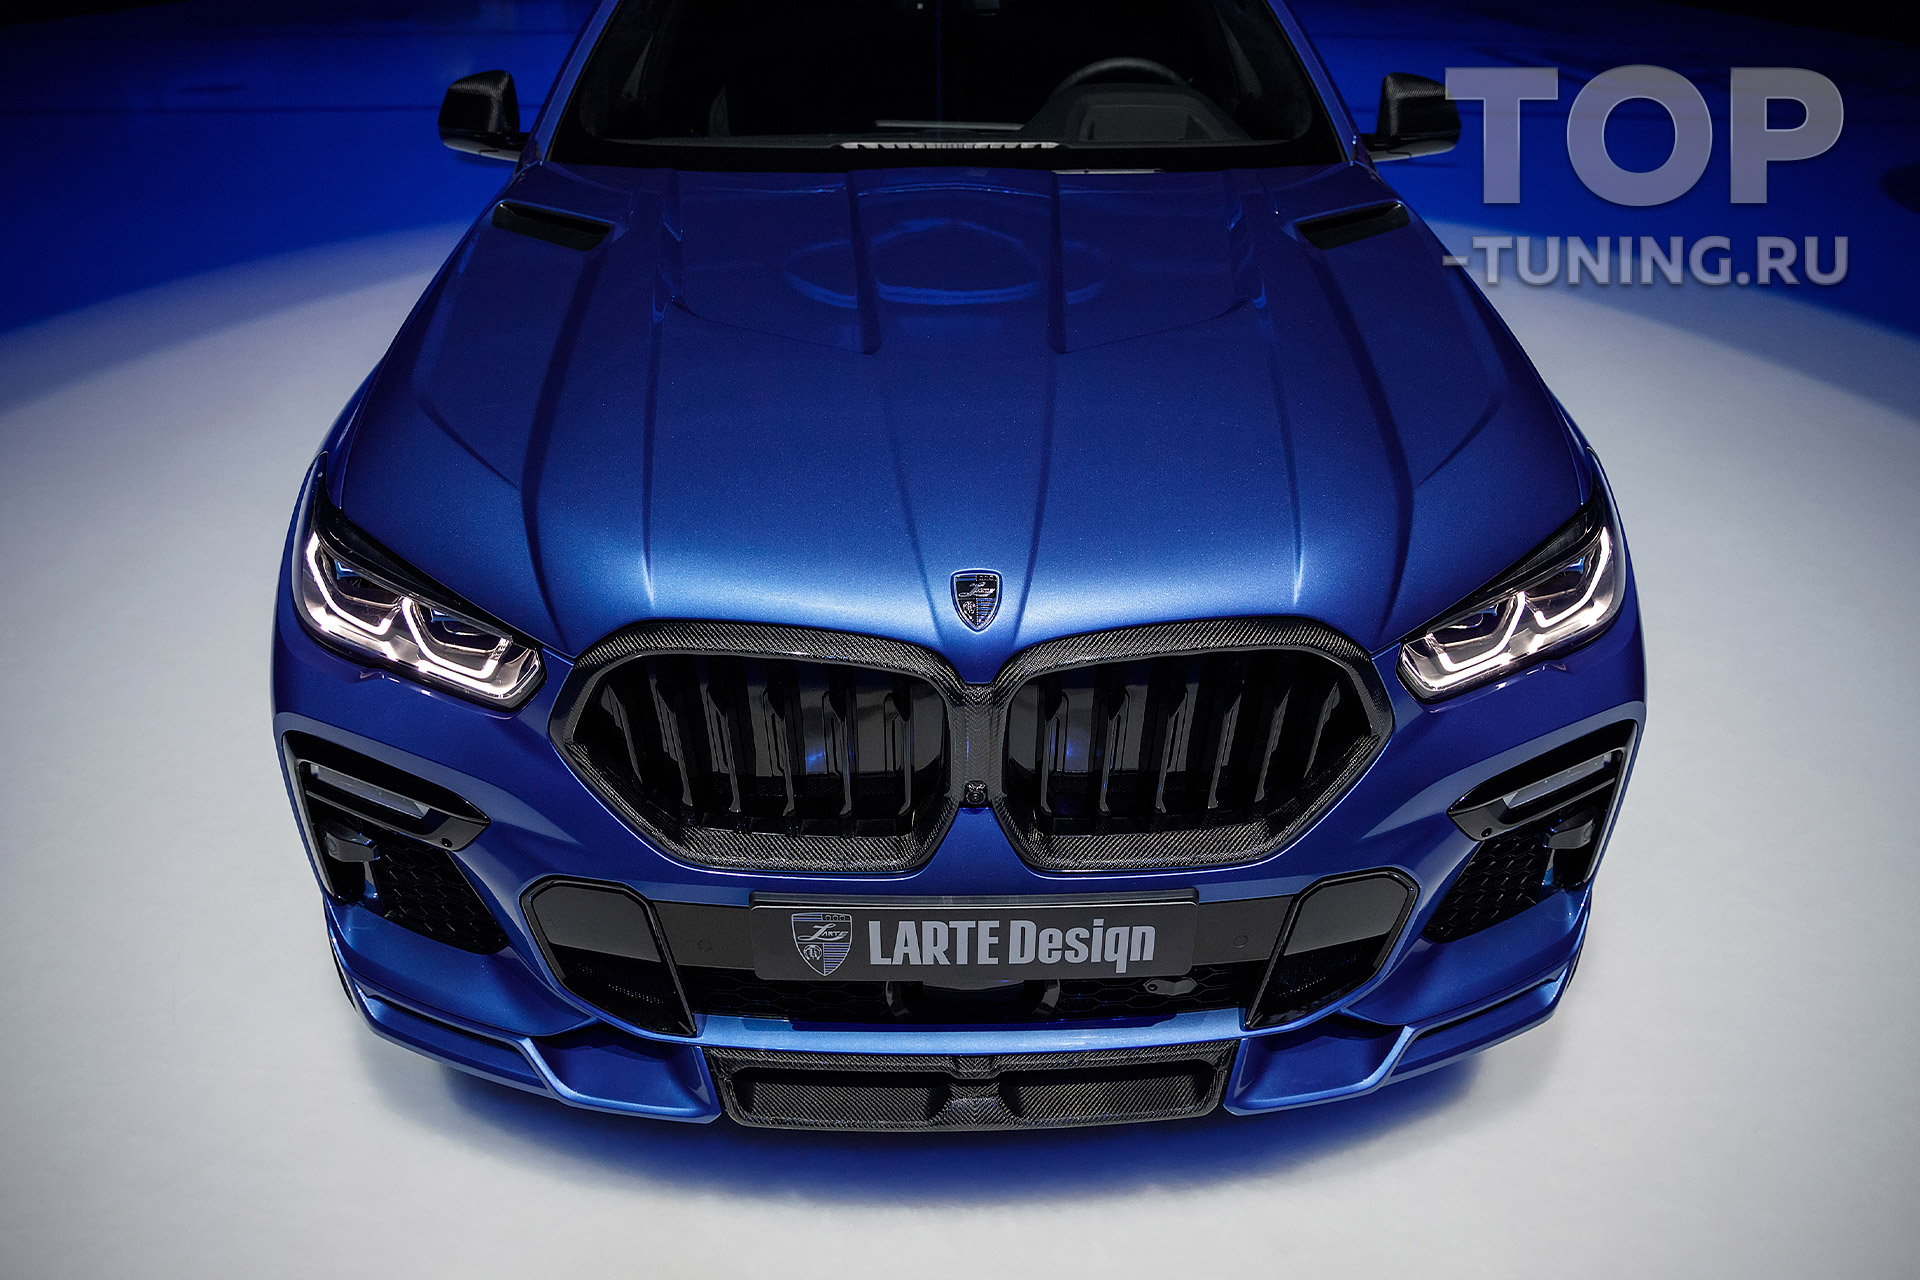 10853 Рамка решетки радиатора Larte Performance для BMW X6 G06